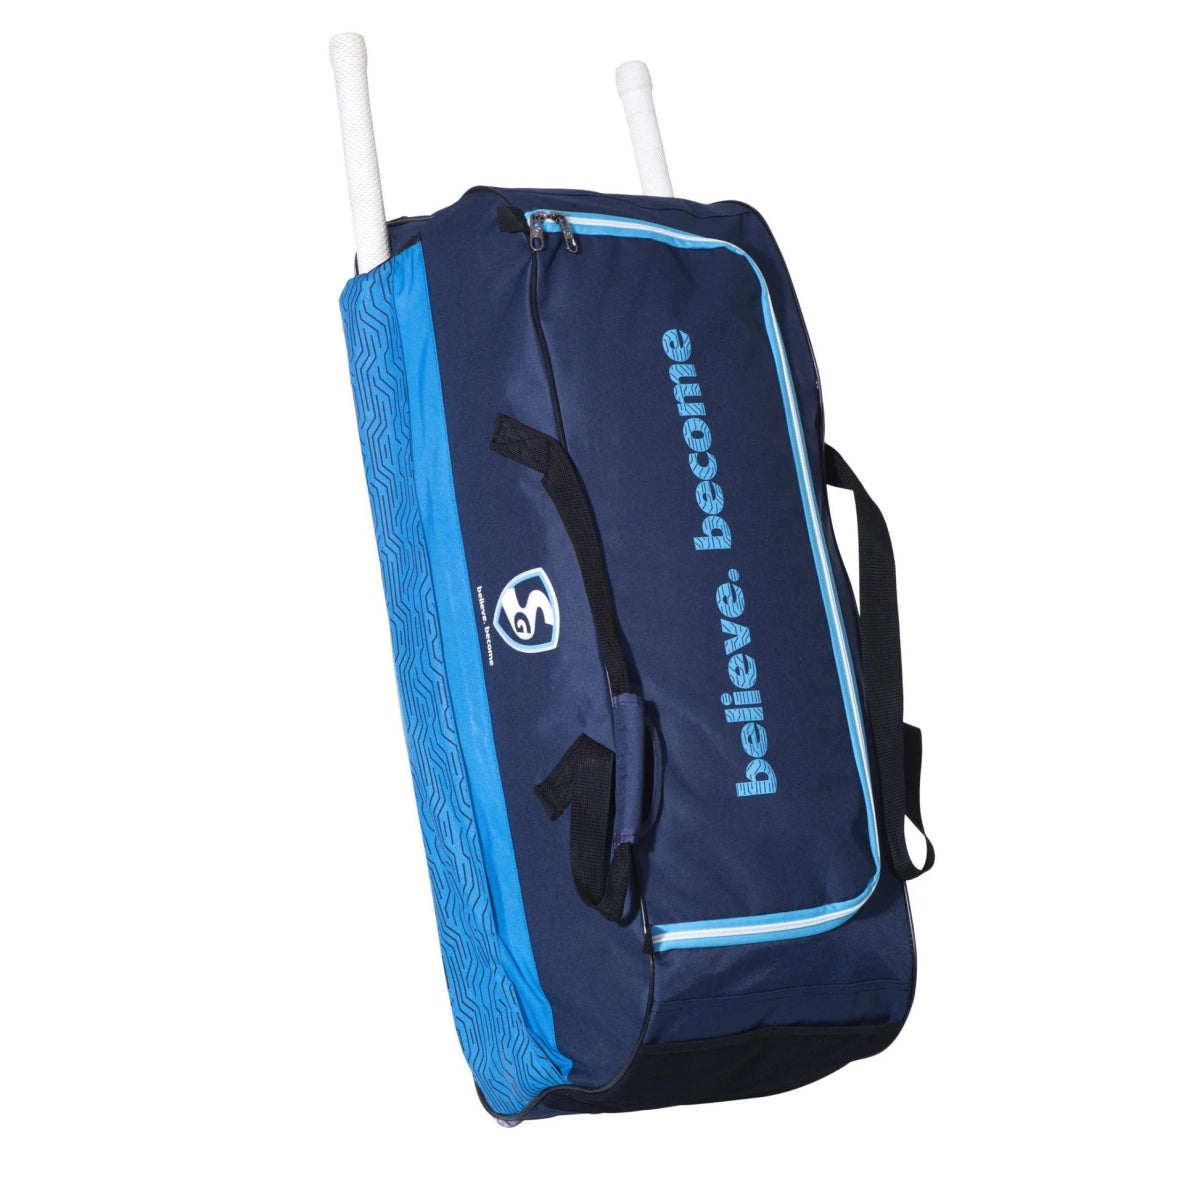 SG Combopak 1.0 Cricket Wheelie Kit Bag